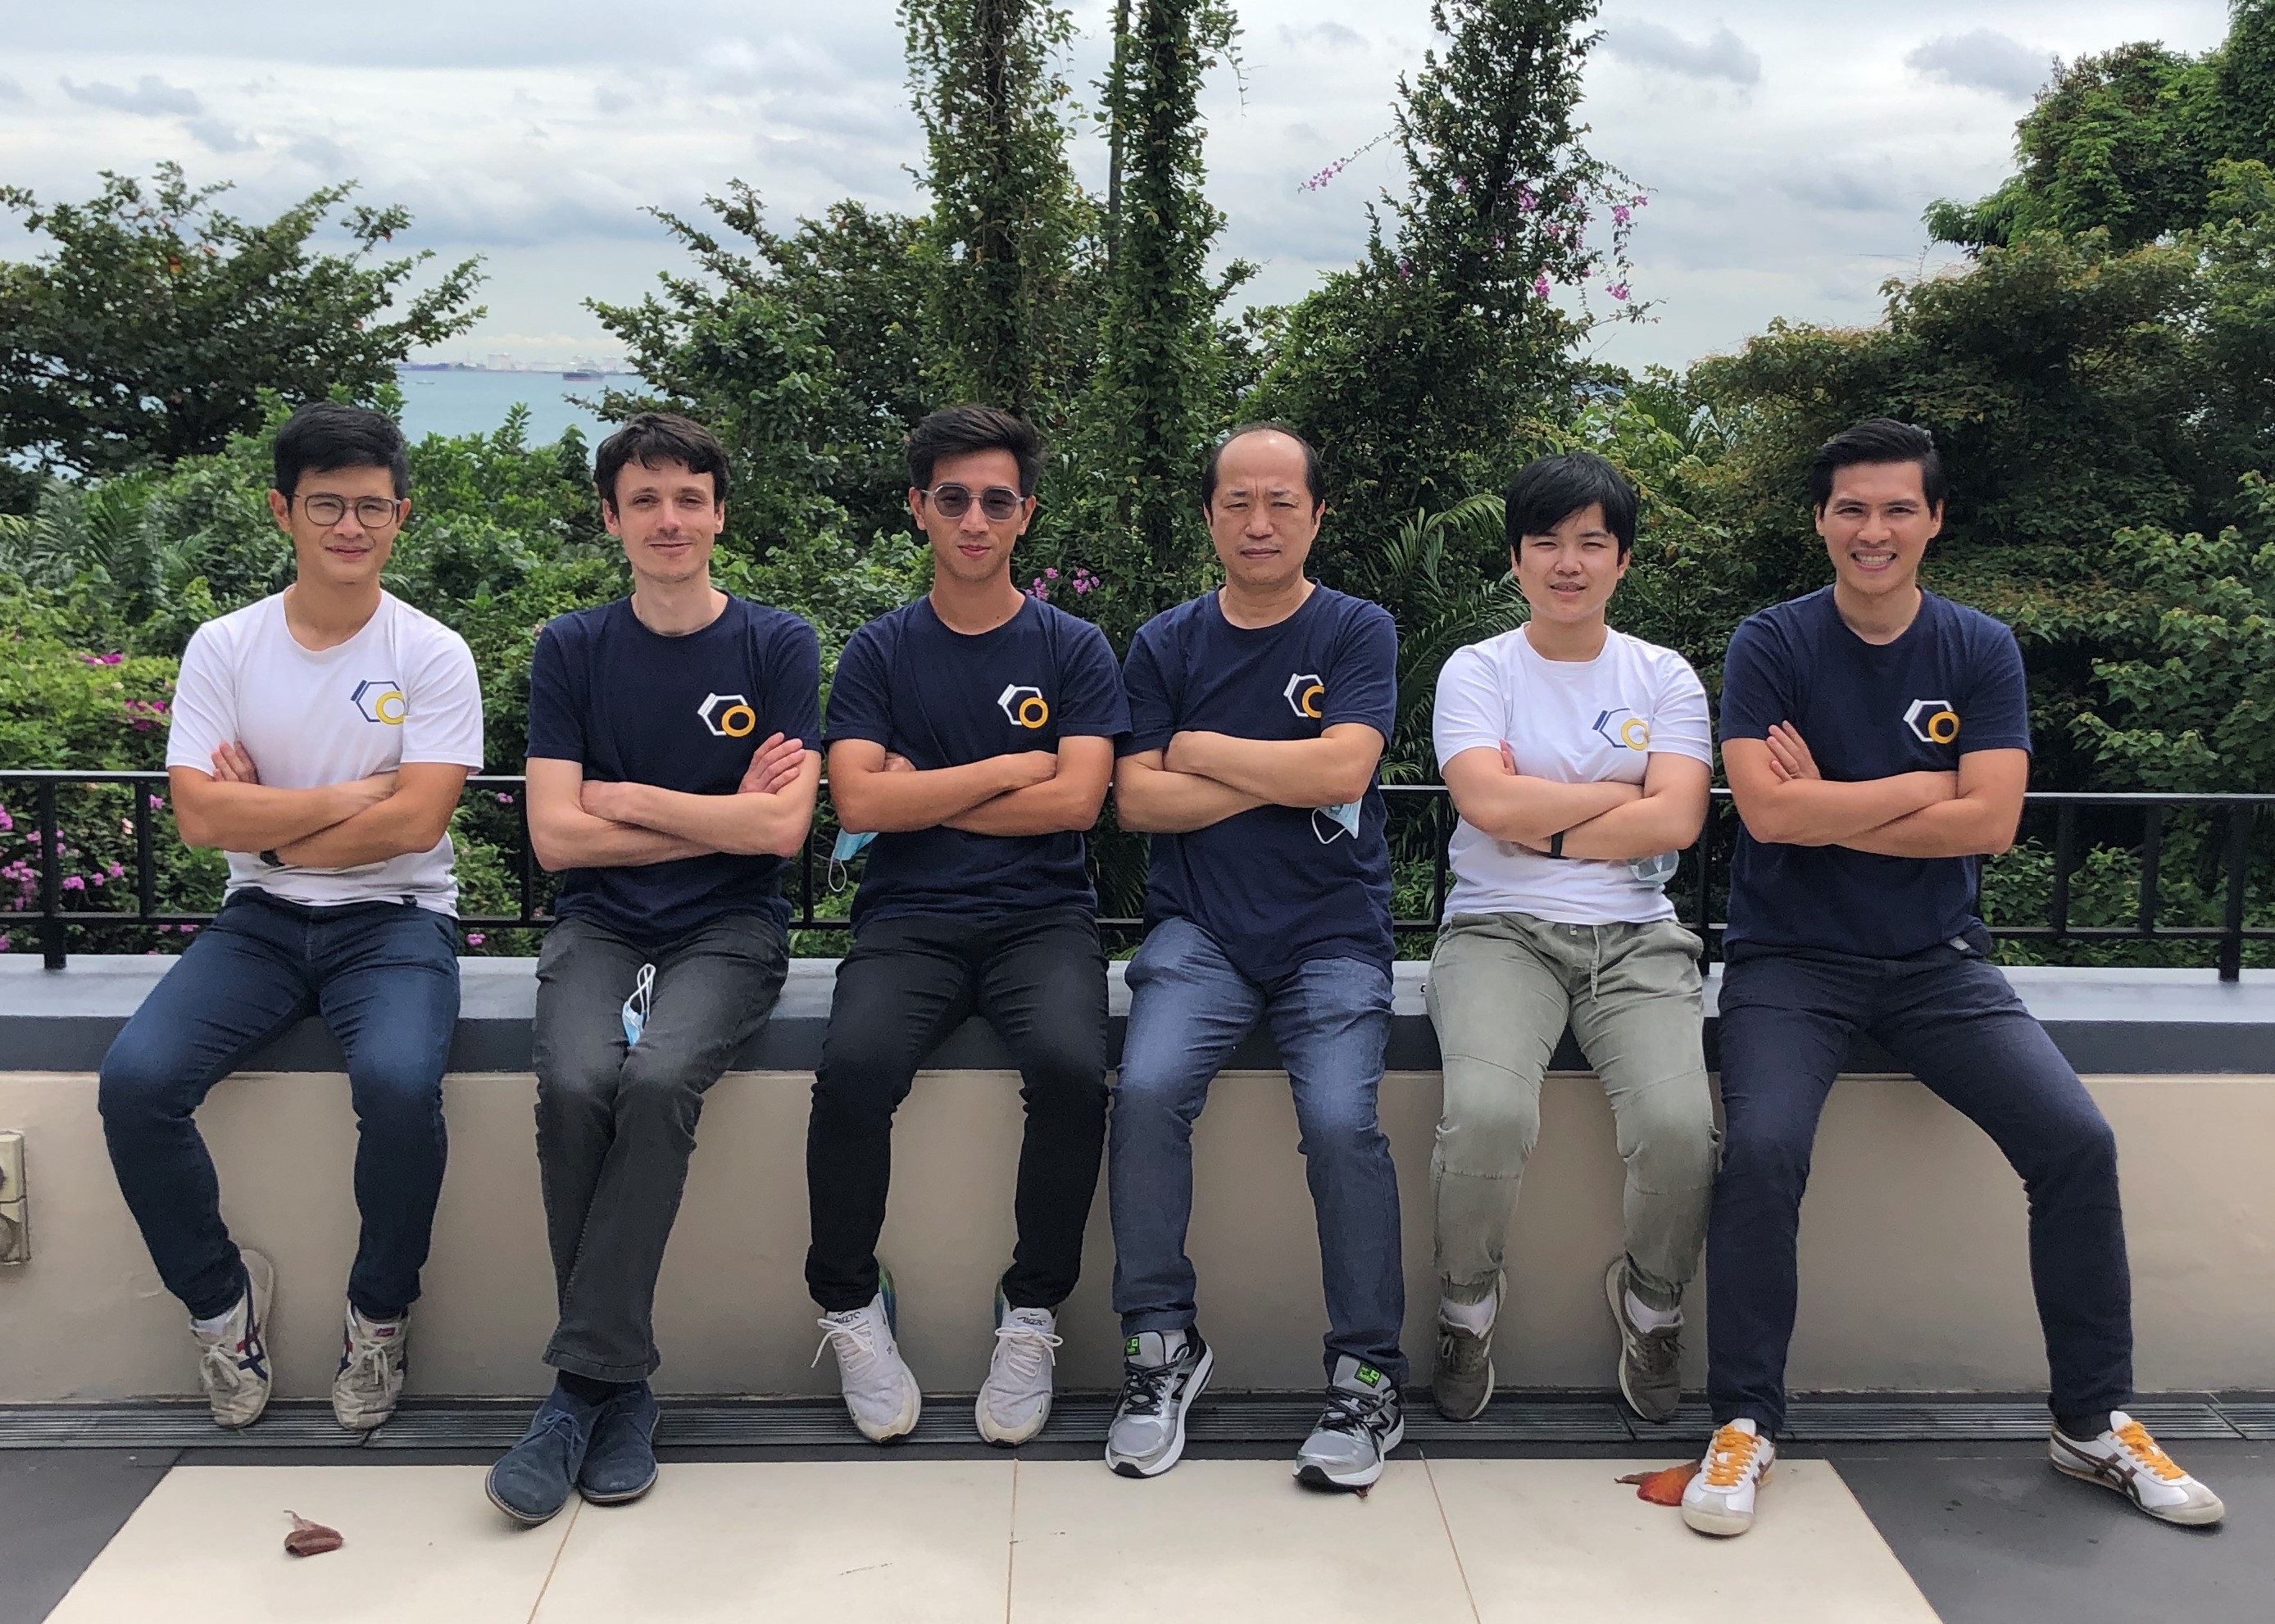 Dr Hung Pham (far left) and his team from Eureka Robotics